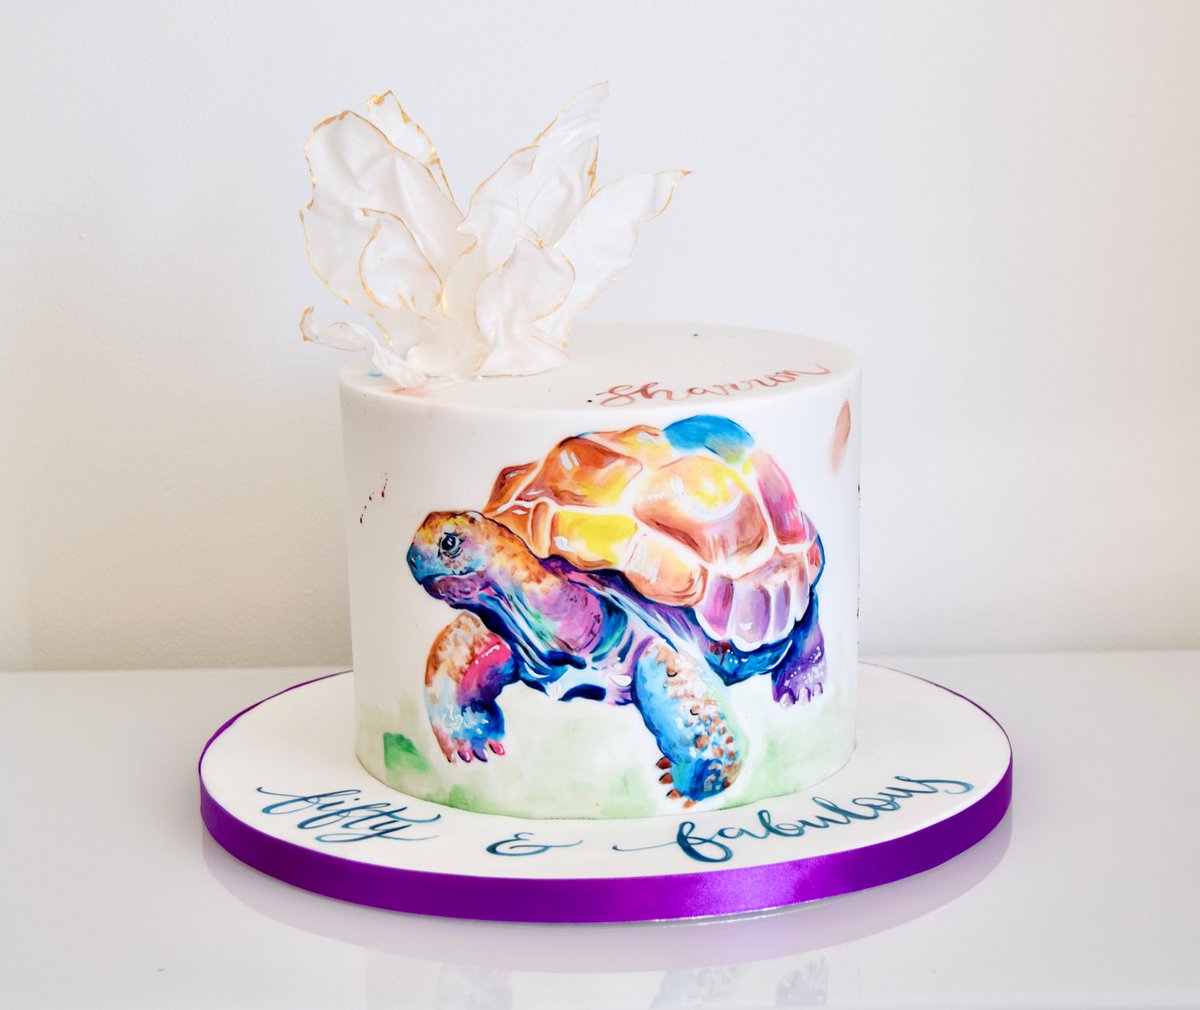 Hand painted Tortoise cake 
#handpaintedcake #pieceofcakewales #tortoise